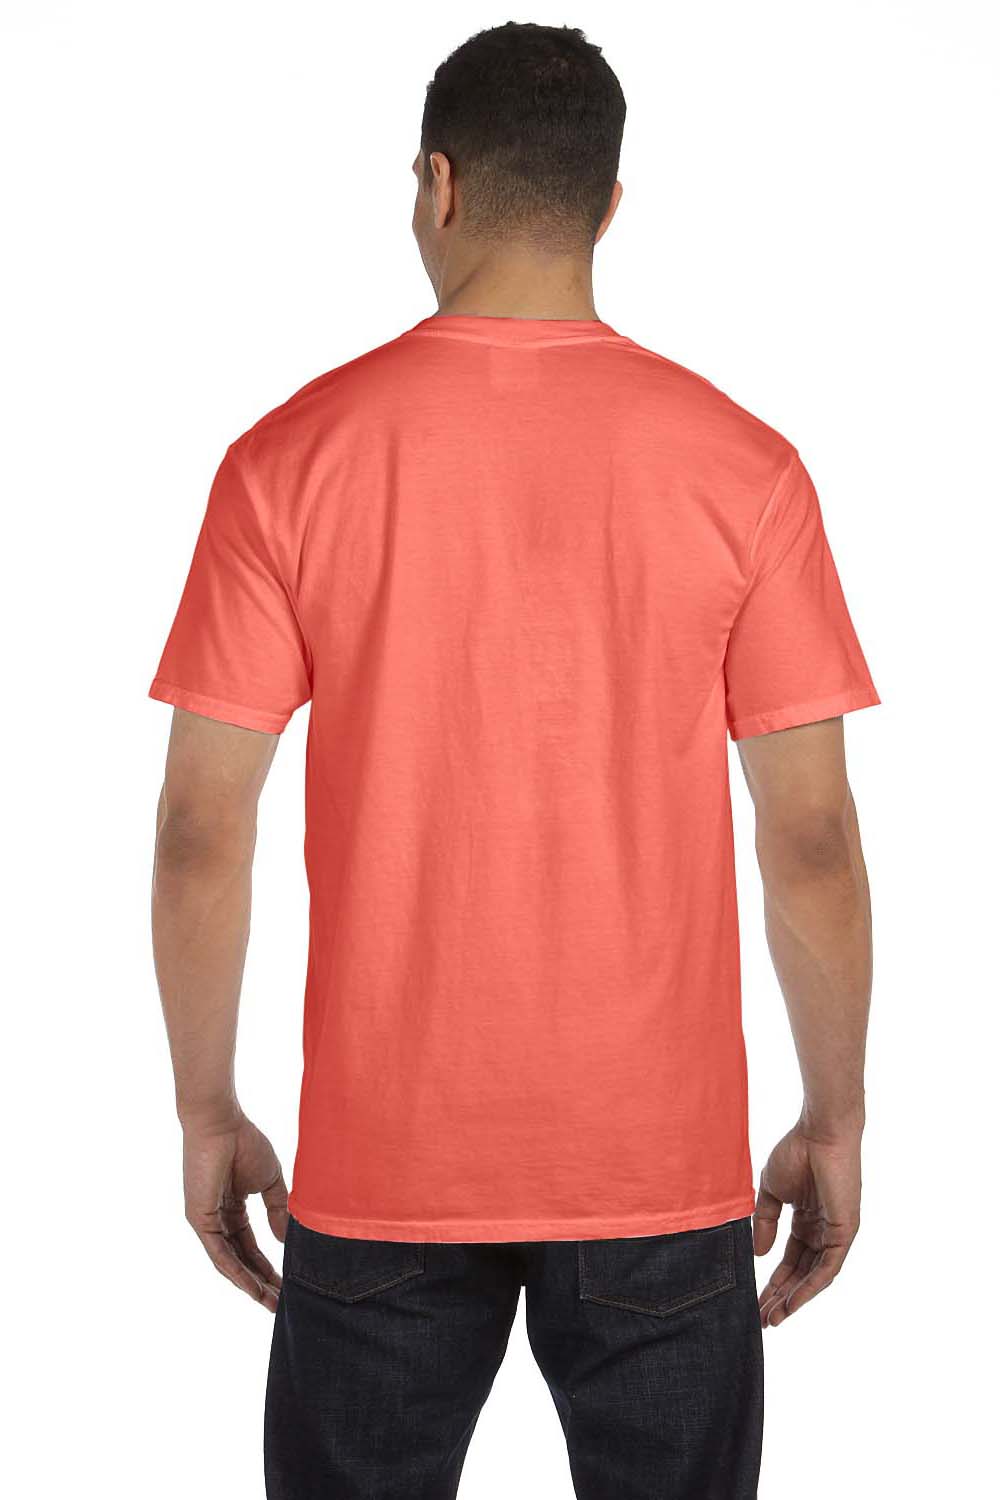 Comfort Colors 6030CC Mens Short Sleeve Crewneck T-Shirt w/ Pocket Bright Salmon Orange Back